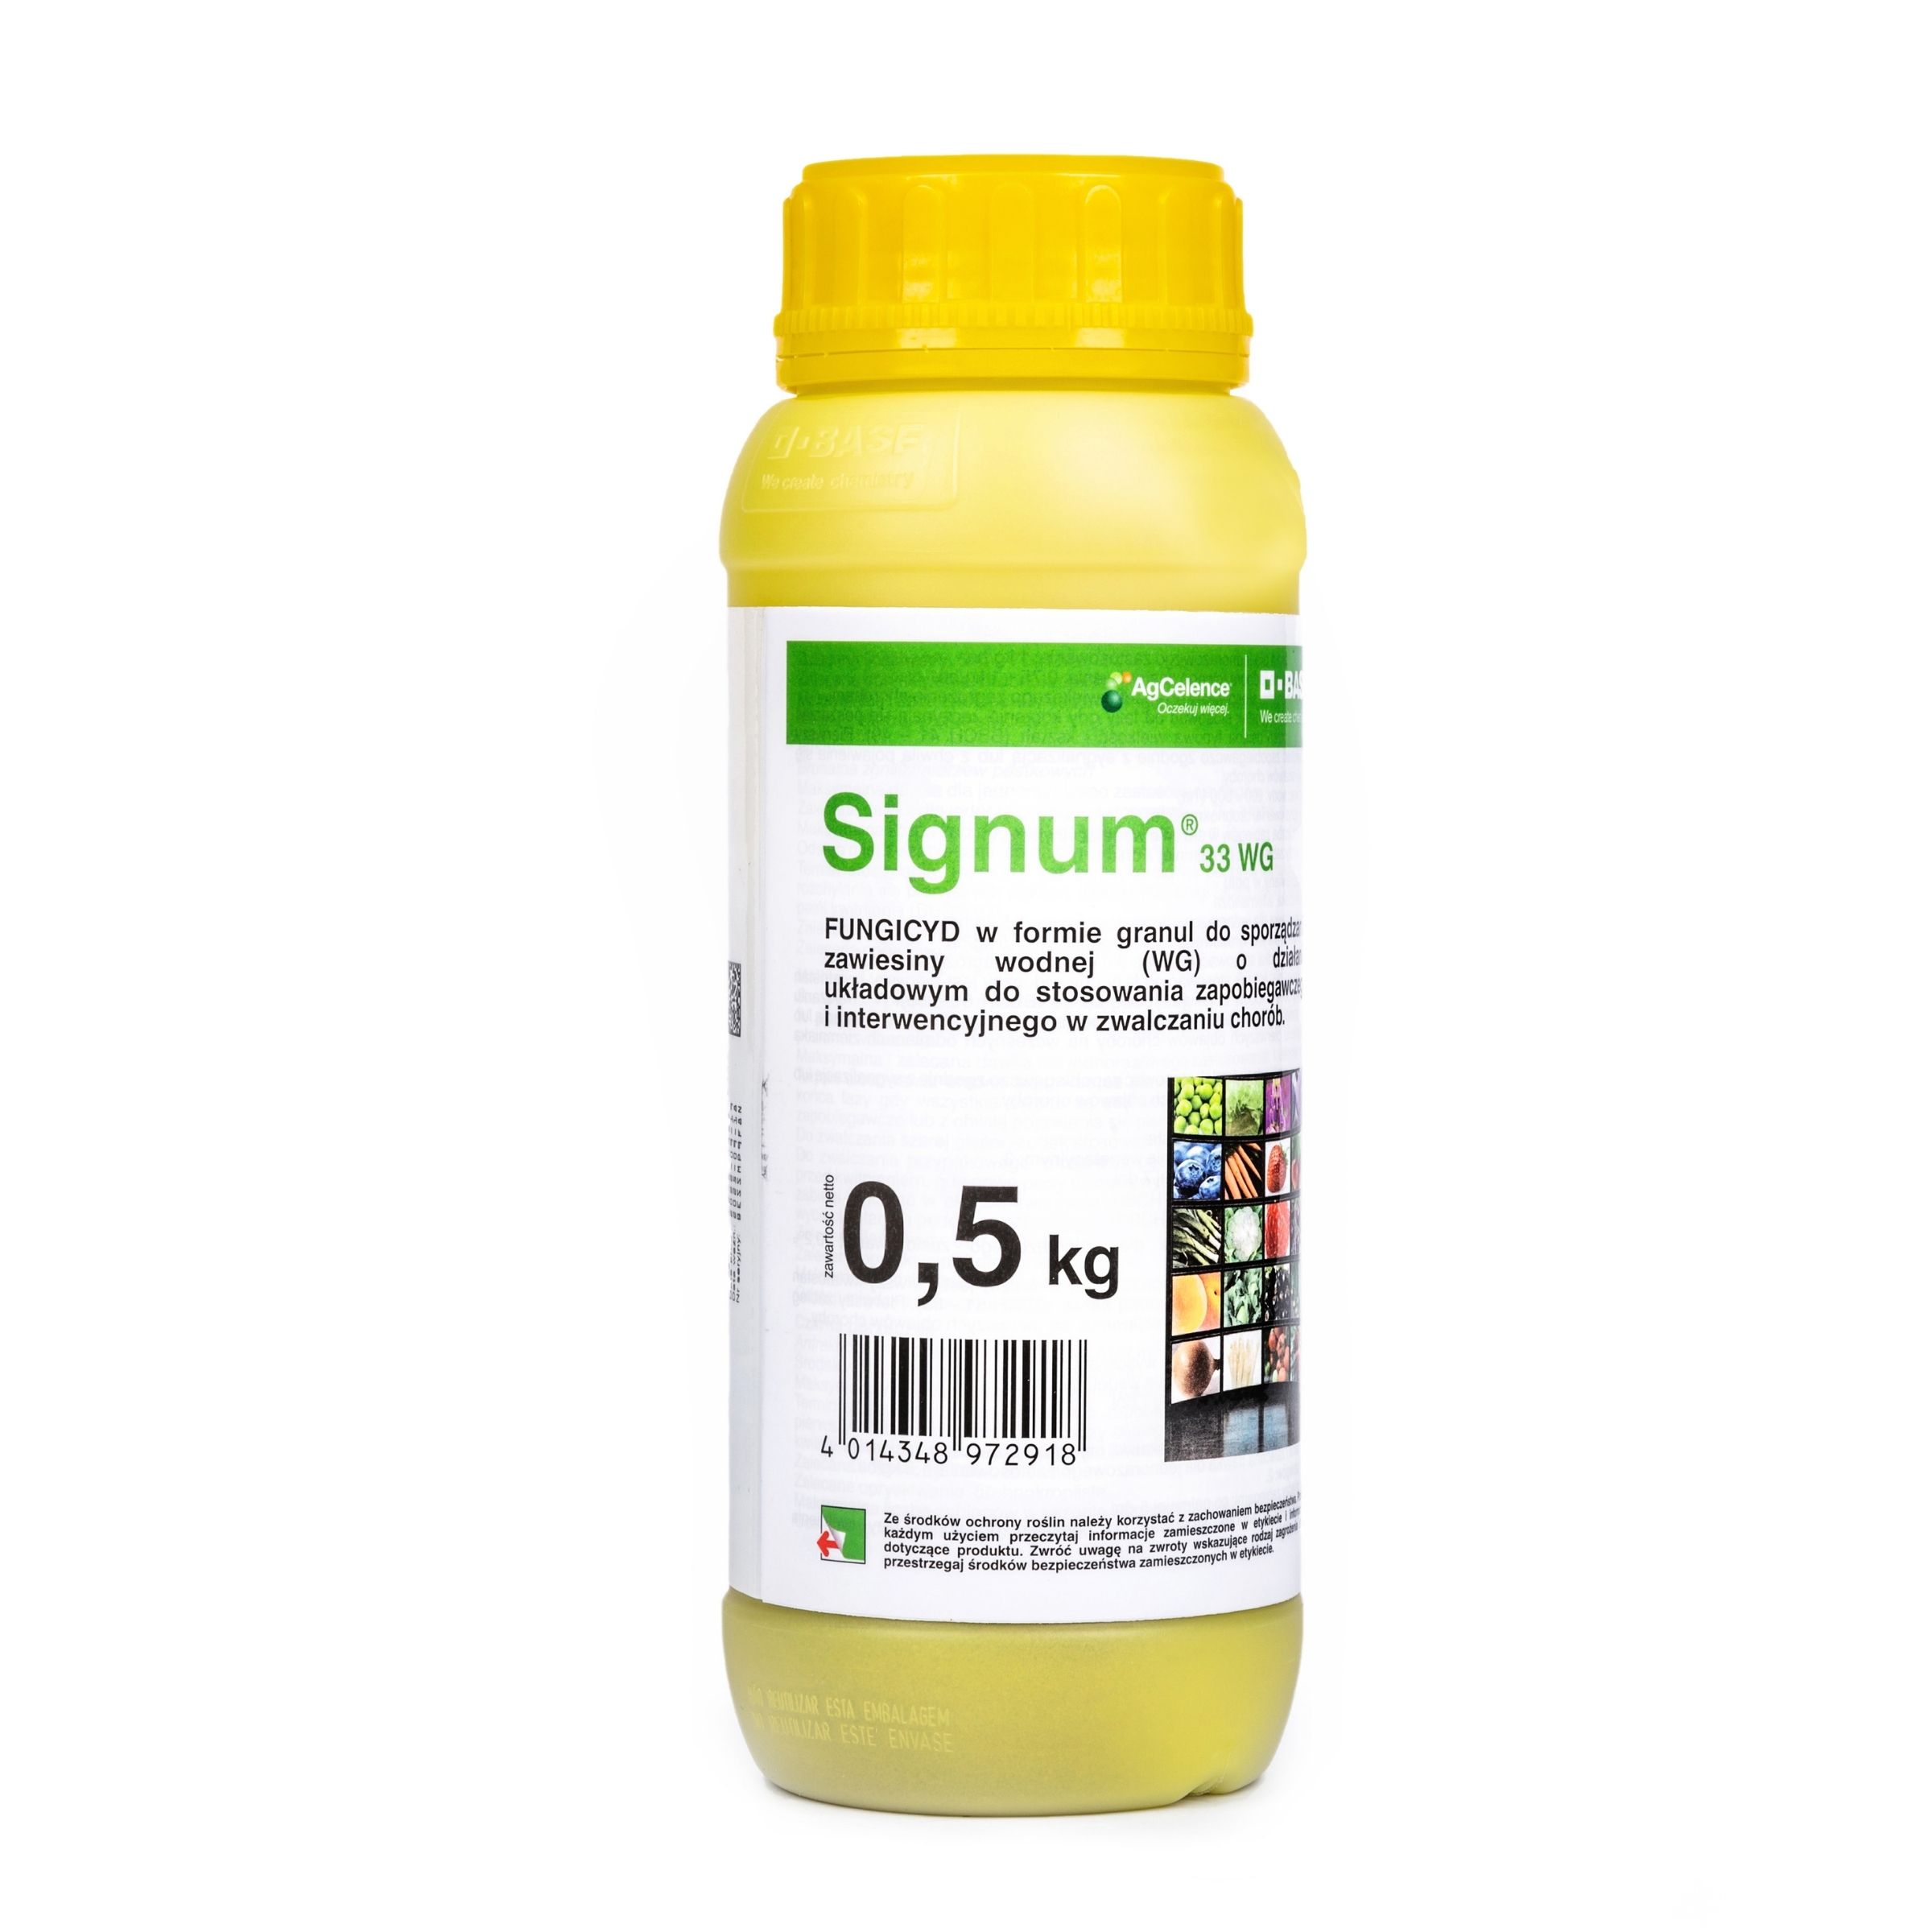 Signum-33-WG-0,5kg.jpg